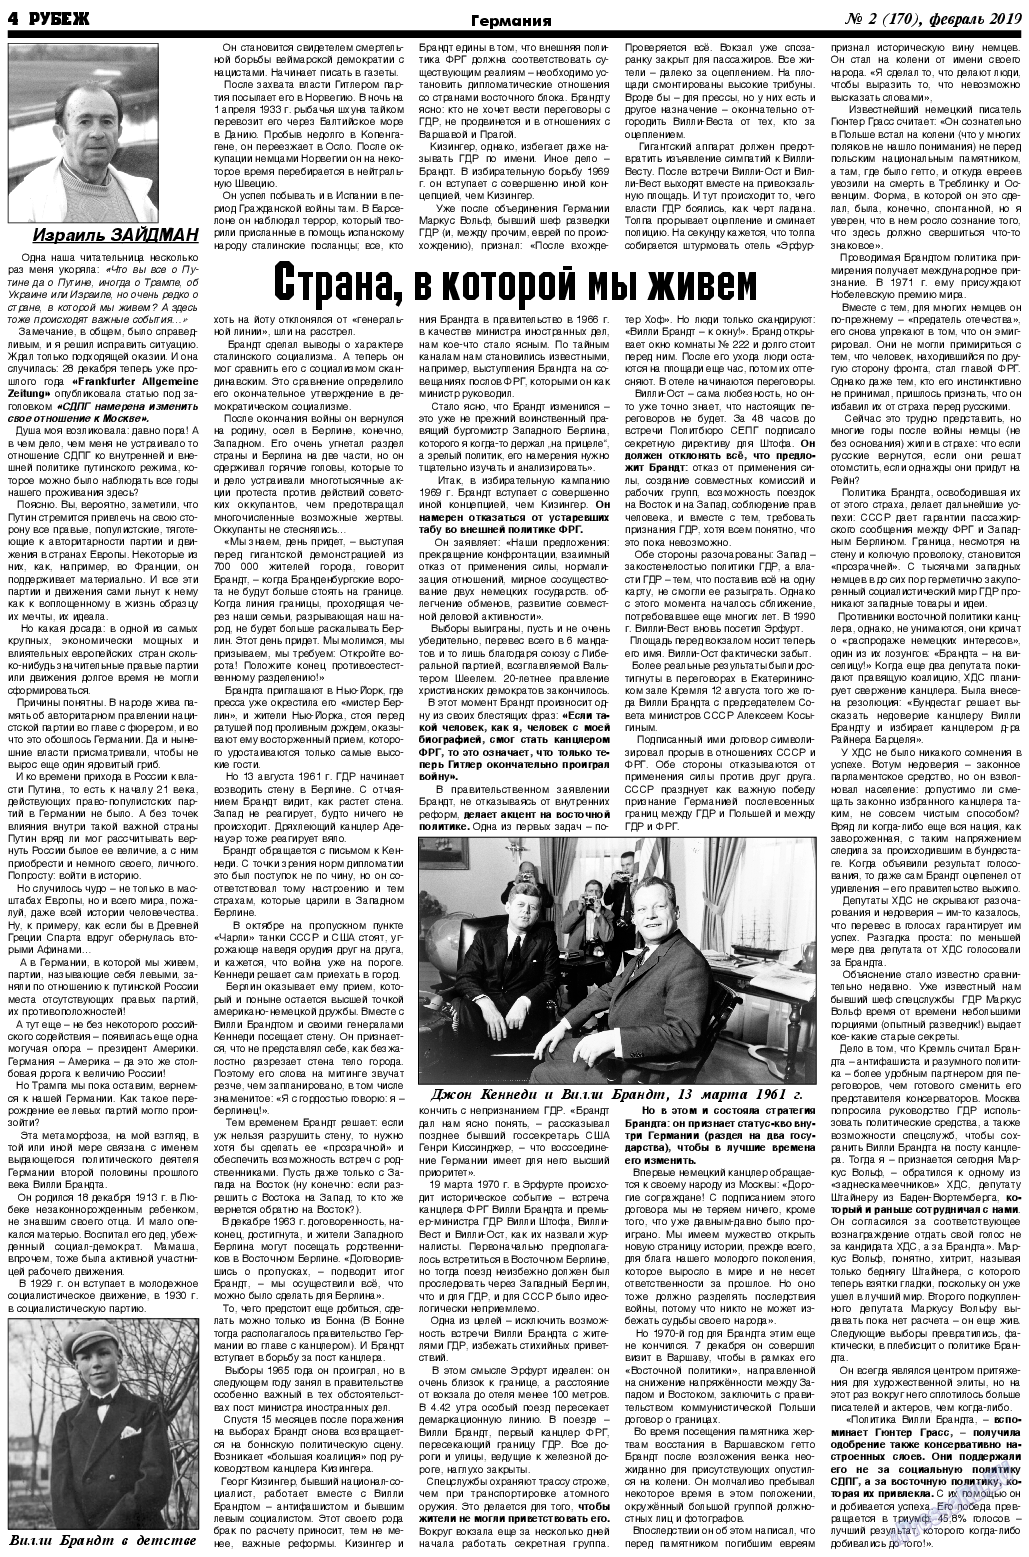 Рубеж, газета. 2019 №2 стр.4